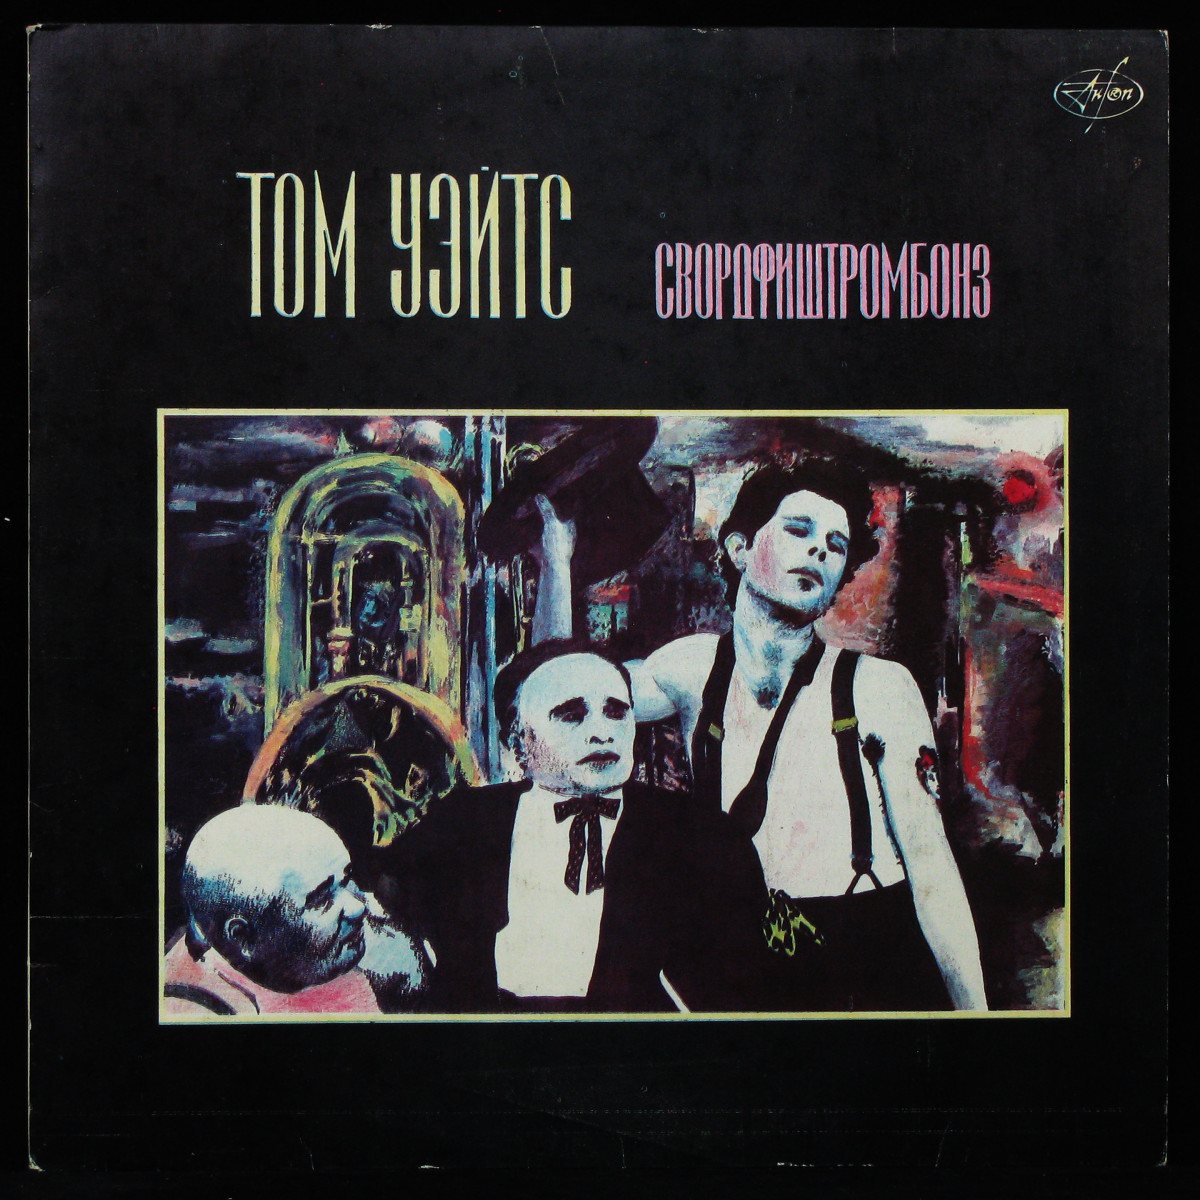 LP Tom Waits — Swordfishtrombones фото